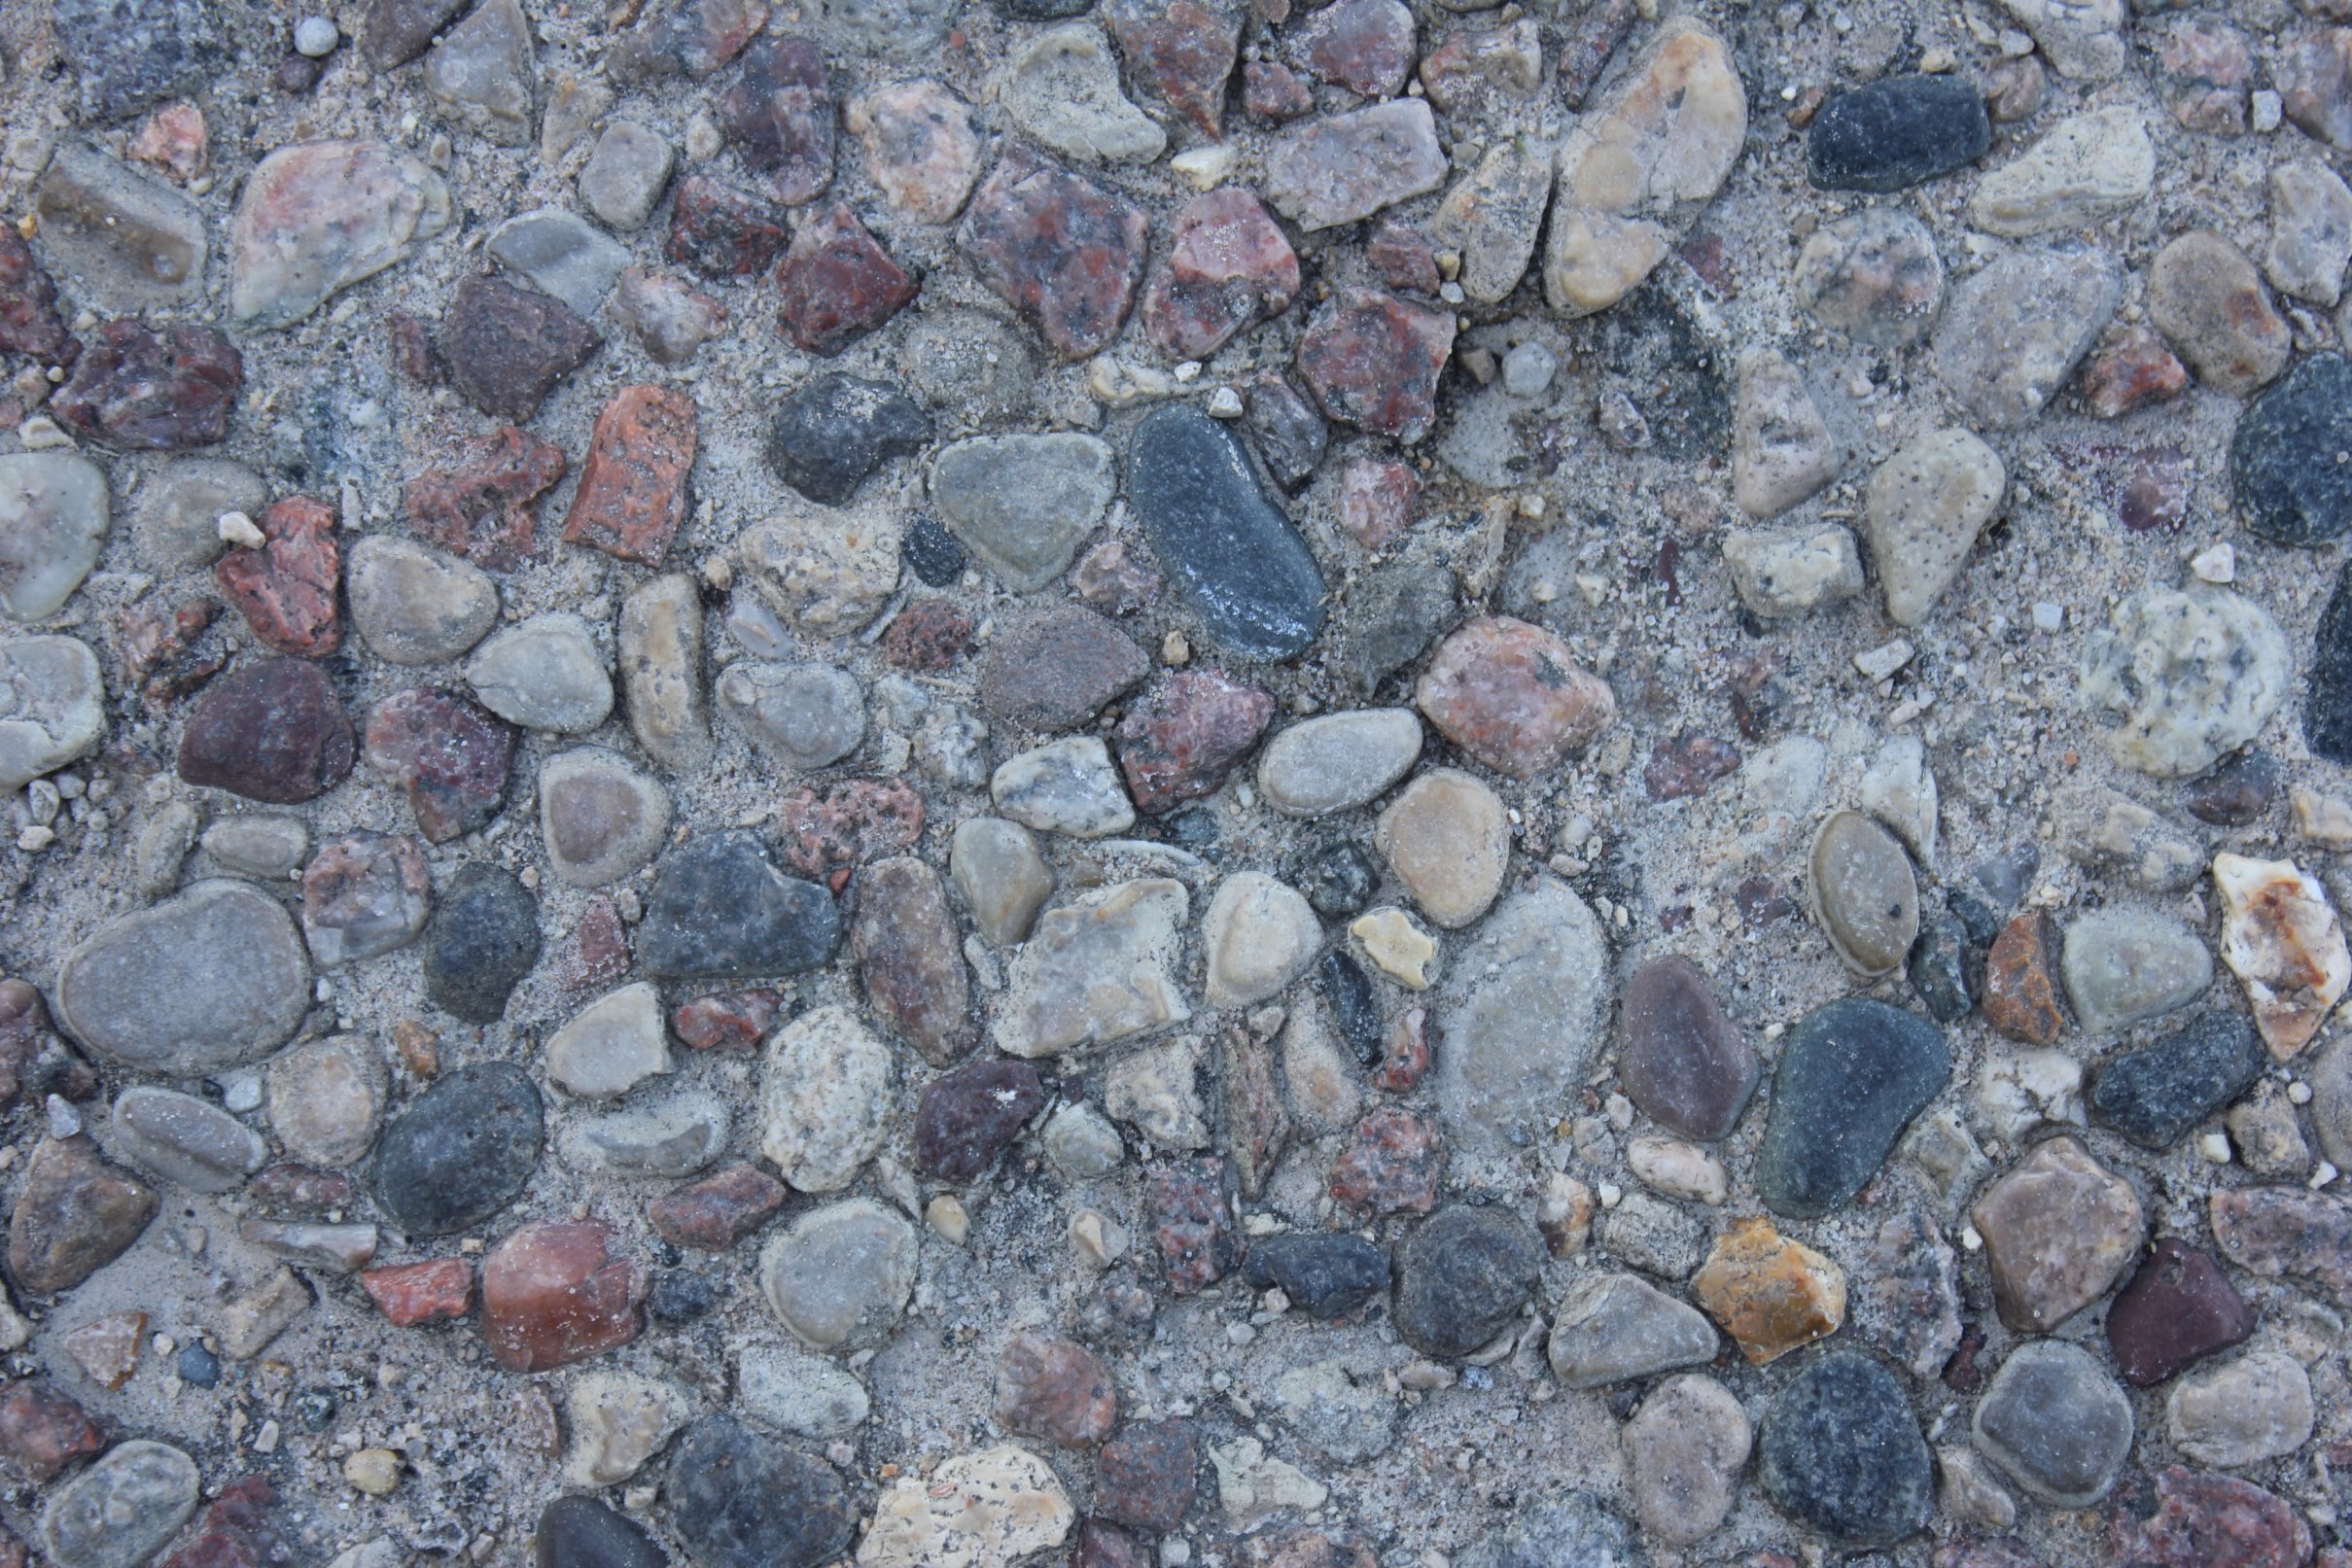  Ground  pebble texture  image Free stock photo Public 